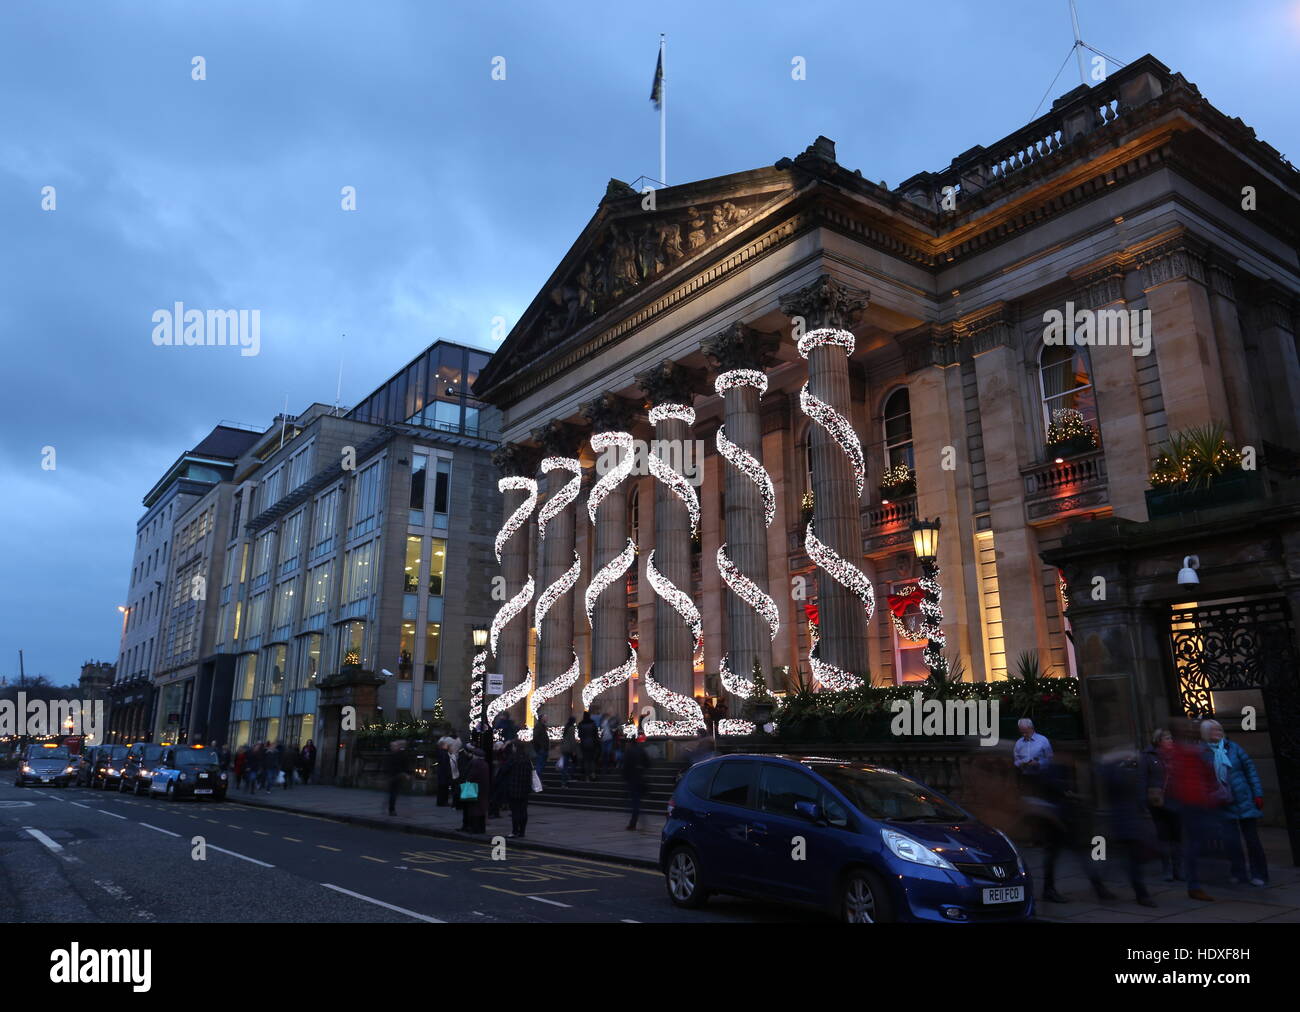 Exterior of the Dome restaurant with Christmas decorations George Street Edinburgh Scotland  December 2016 Stock Photo